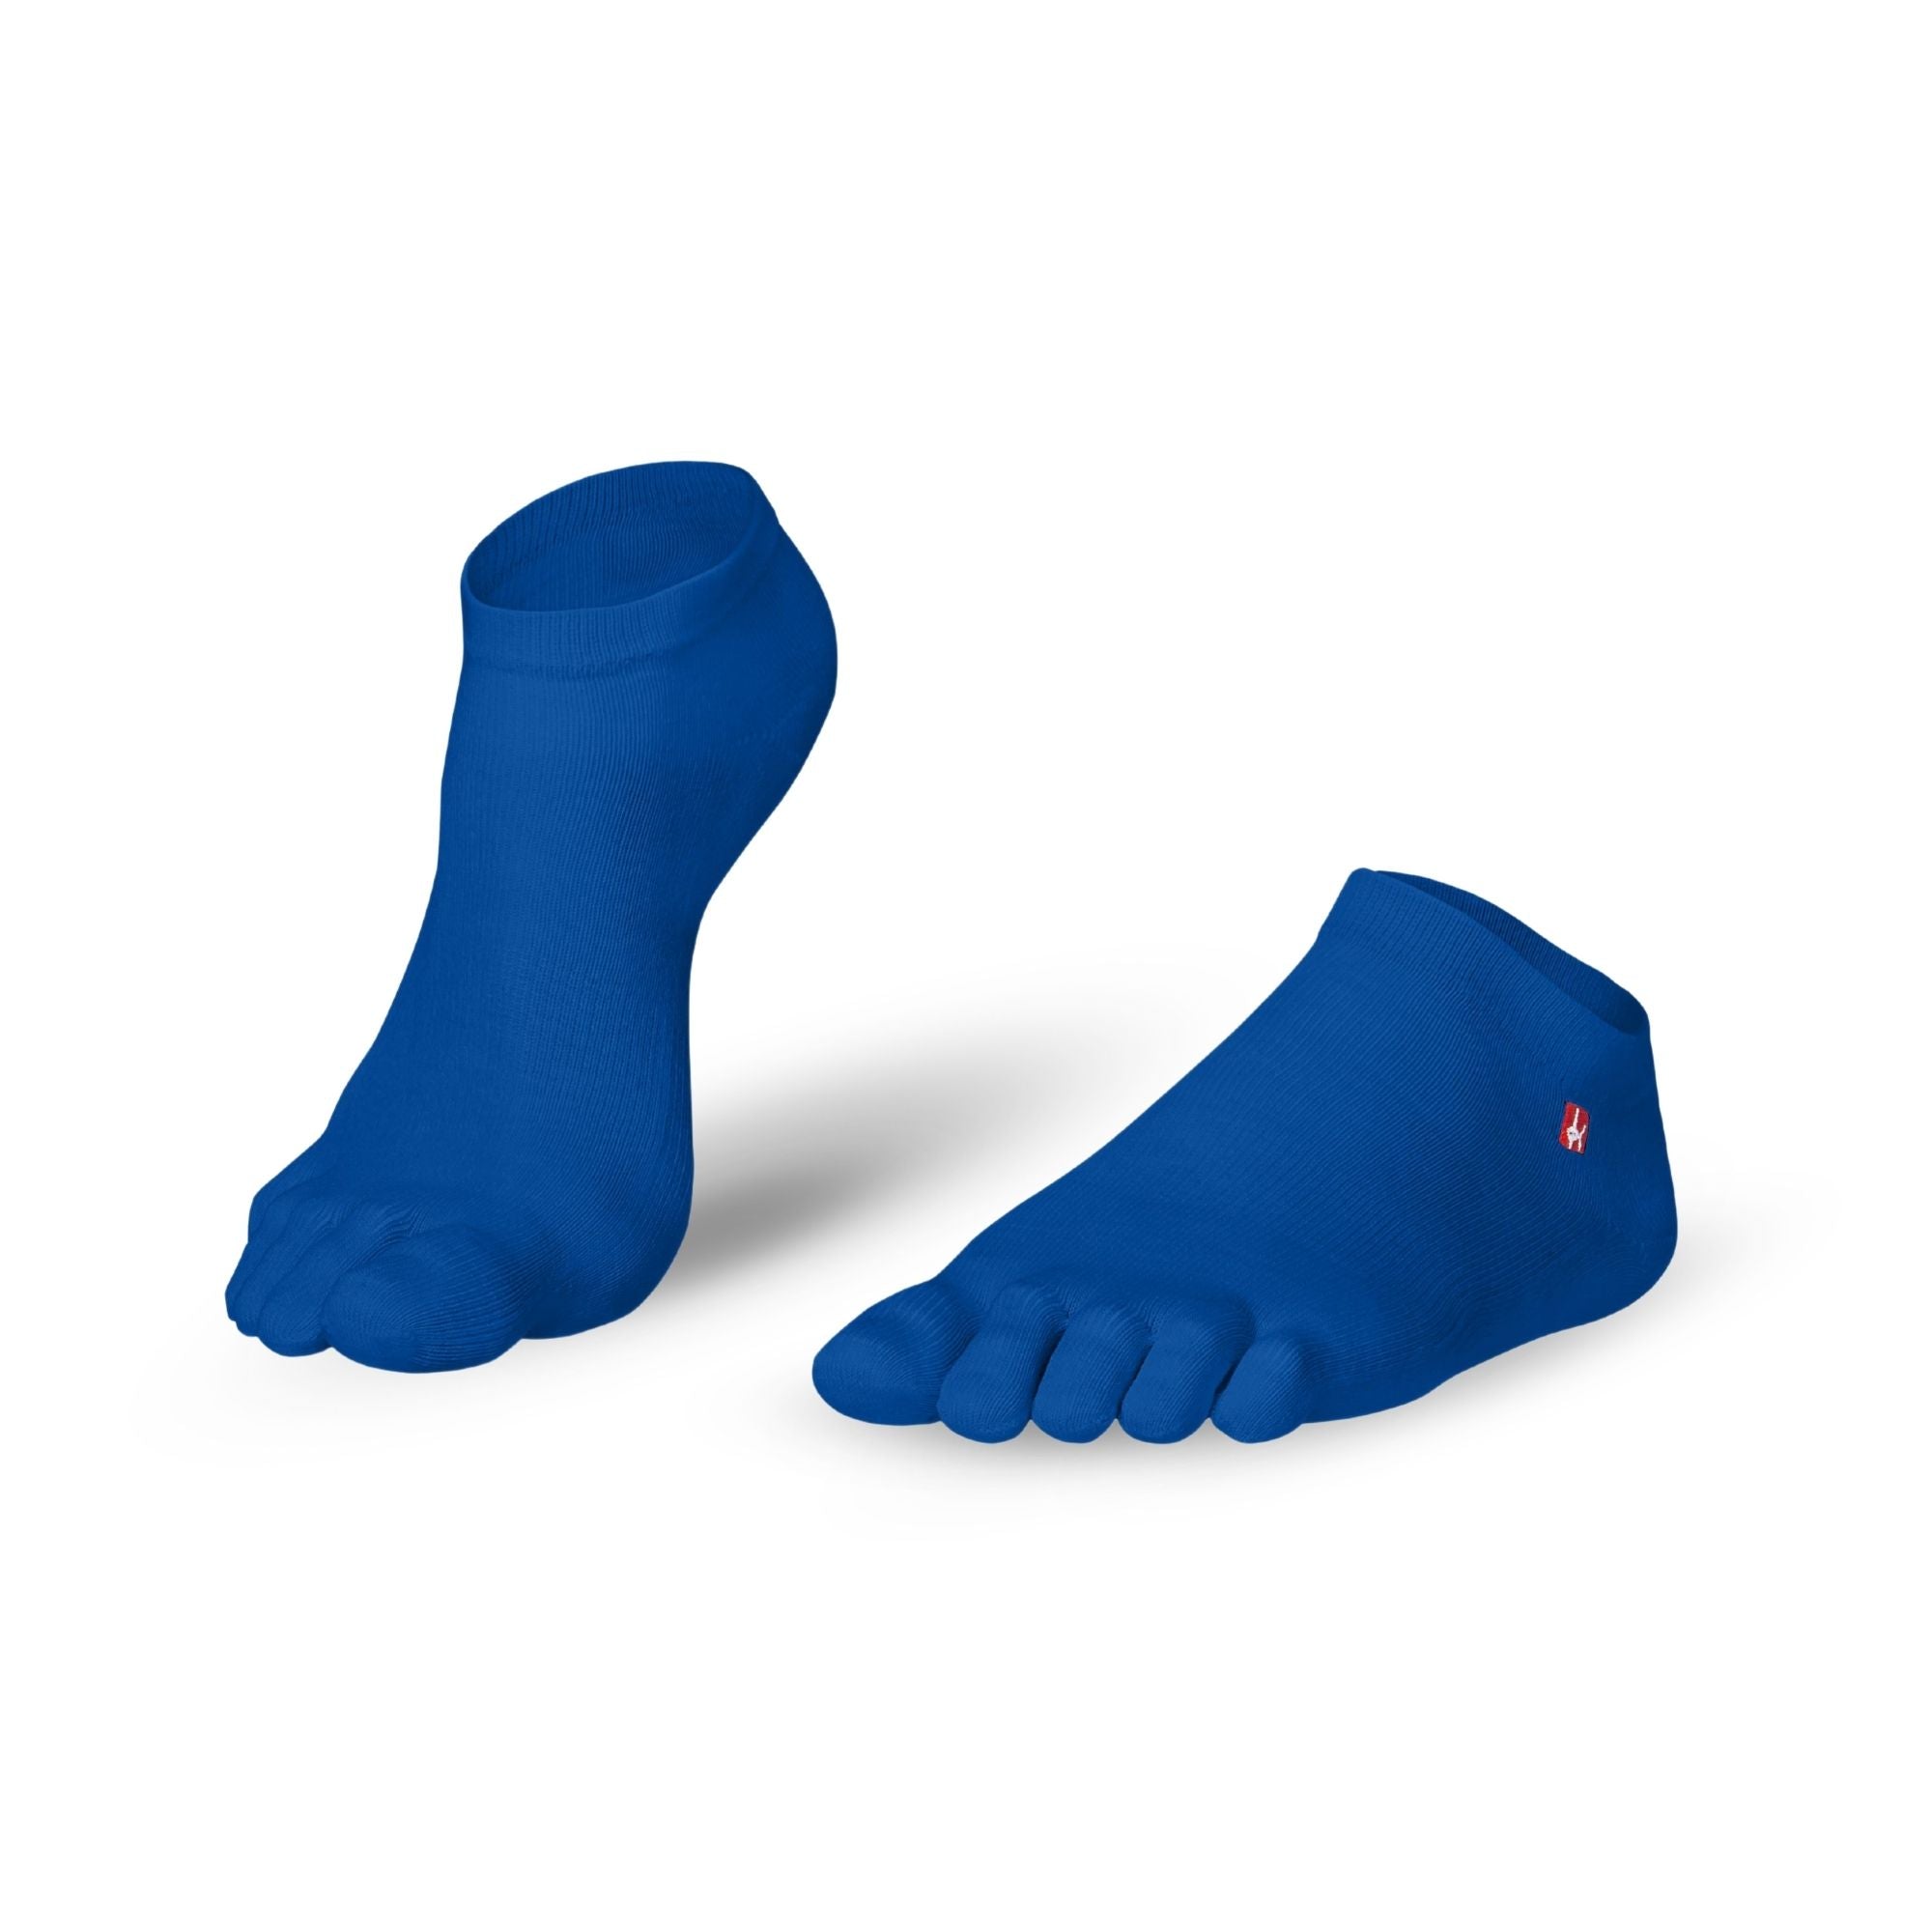 Toe socks Coolmax Sneaker from Knitido Track & Trail ultralite fresh in tangerine blue